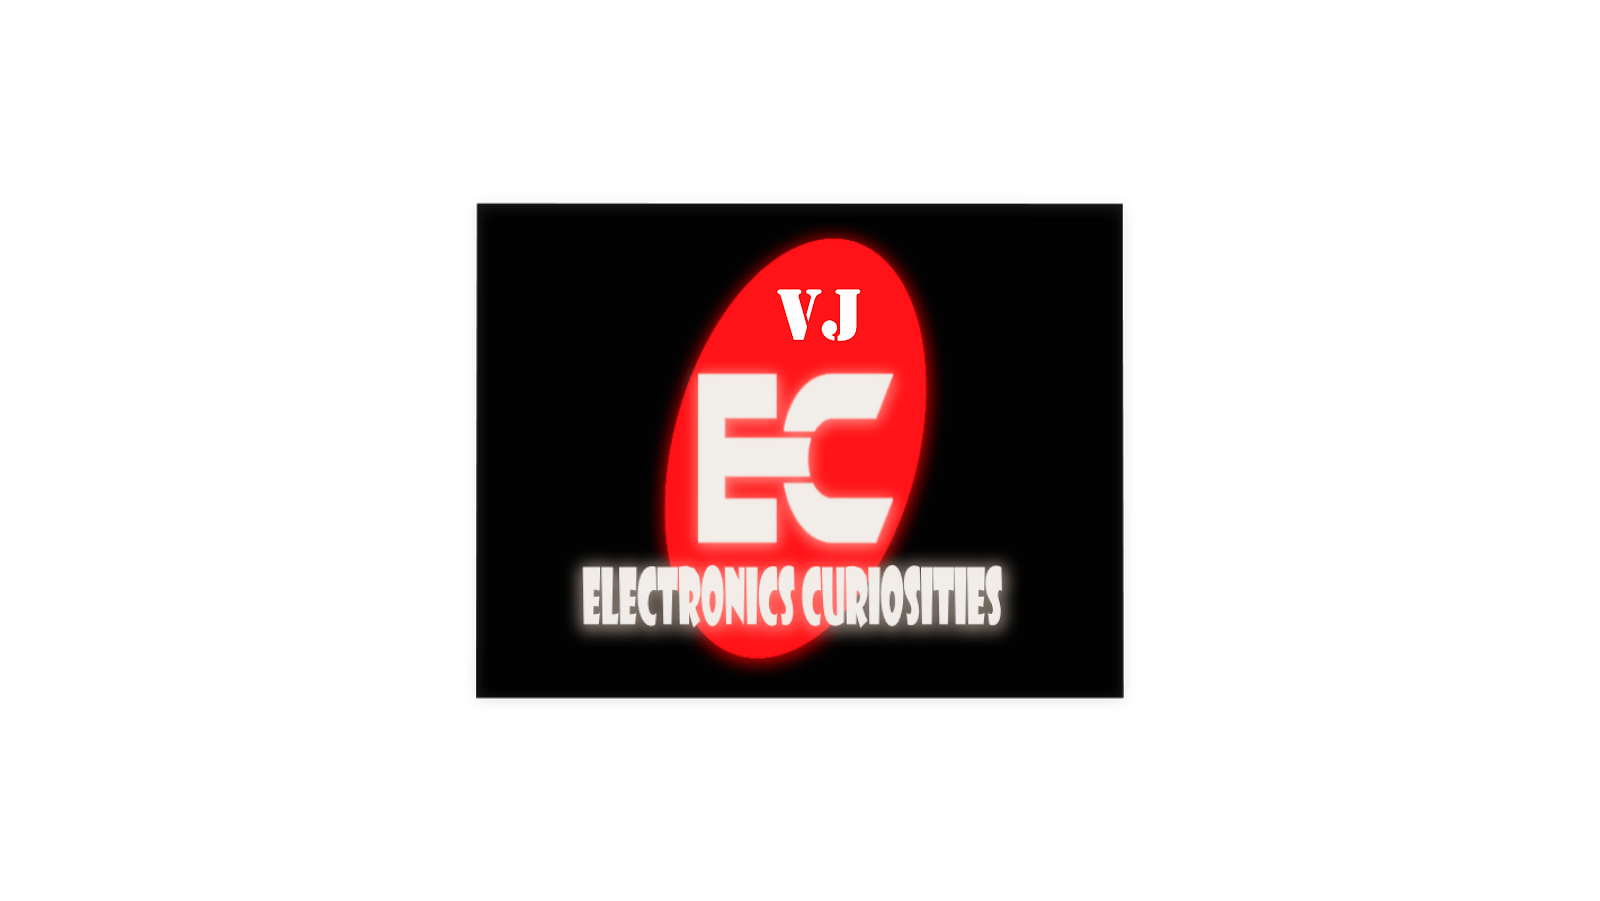 Electronics Curiosities